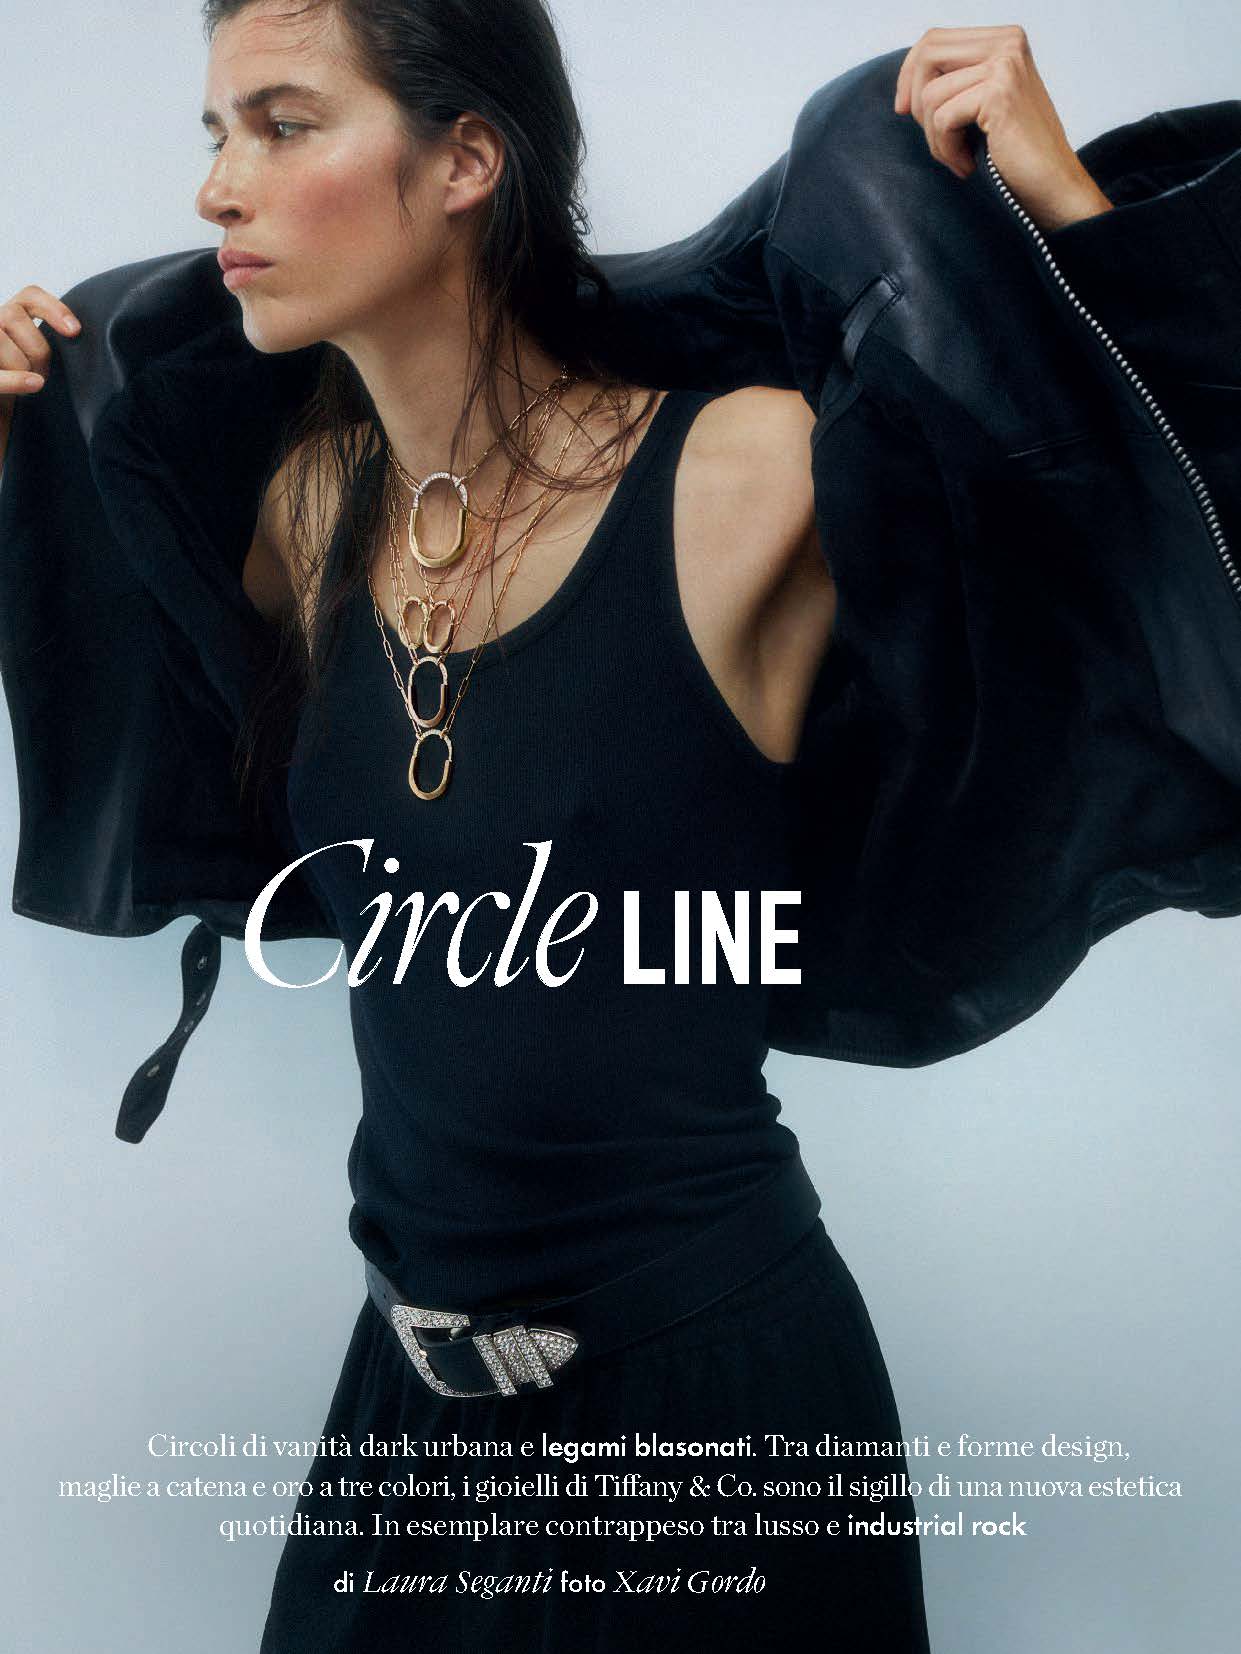 Elle Magazine - Circle Line